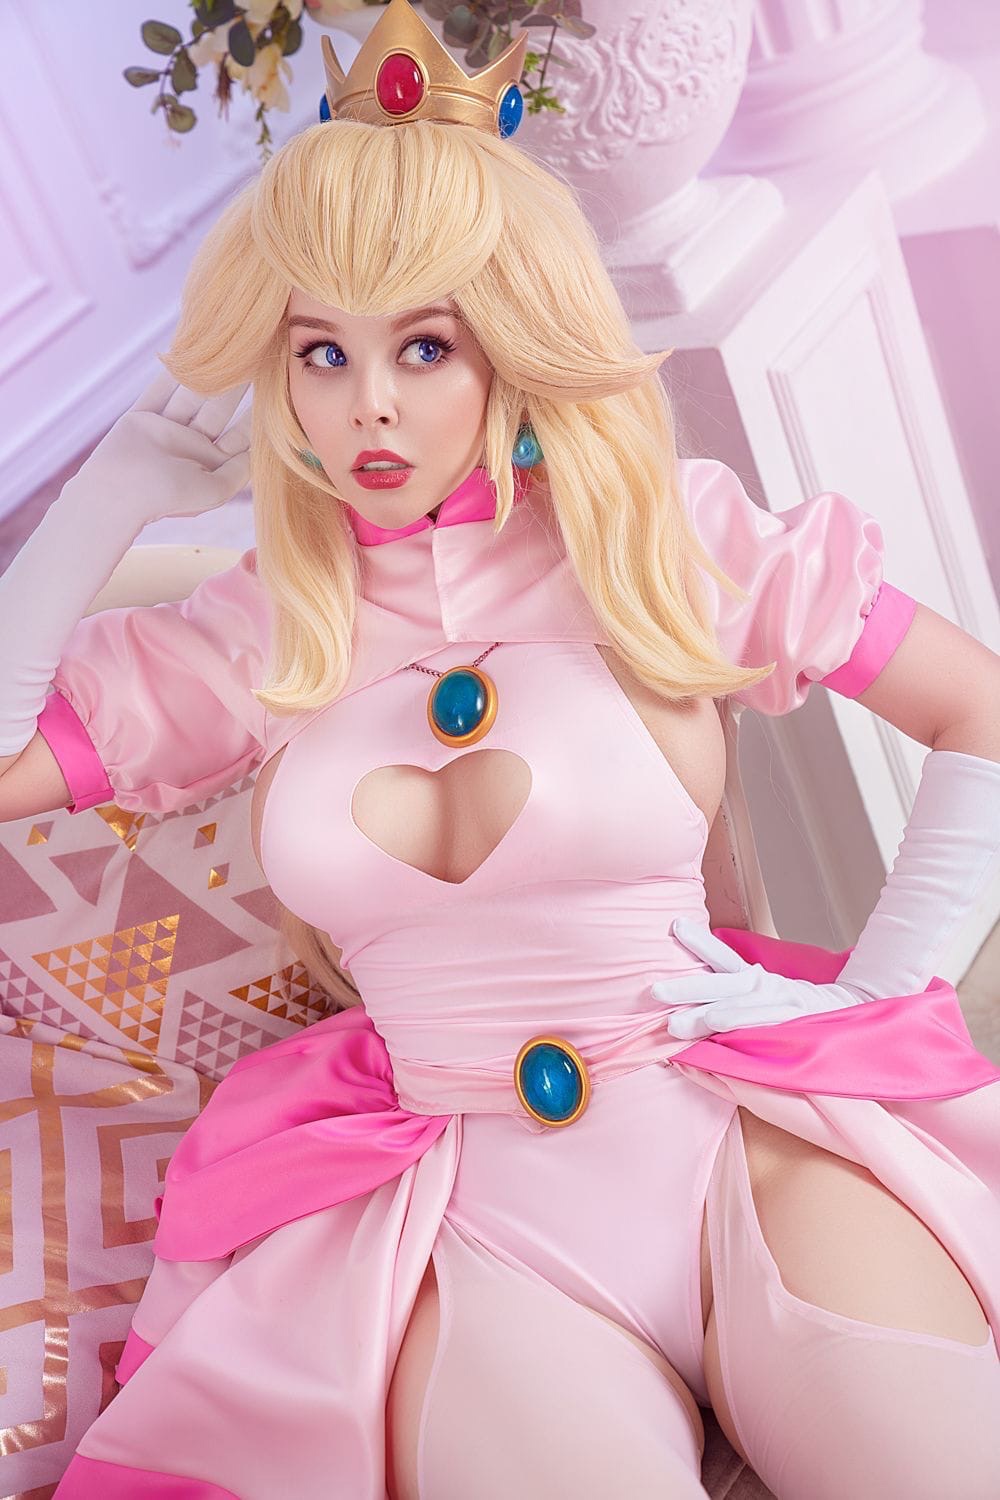 Princess peach nsfw cosplay